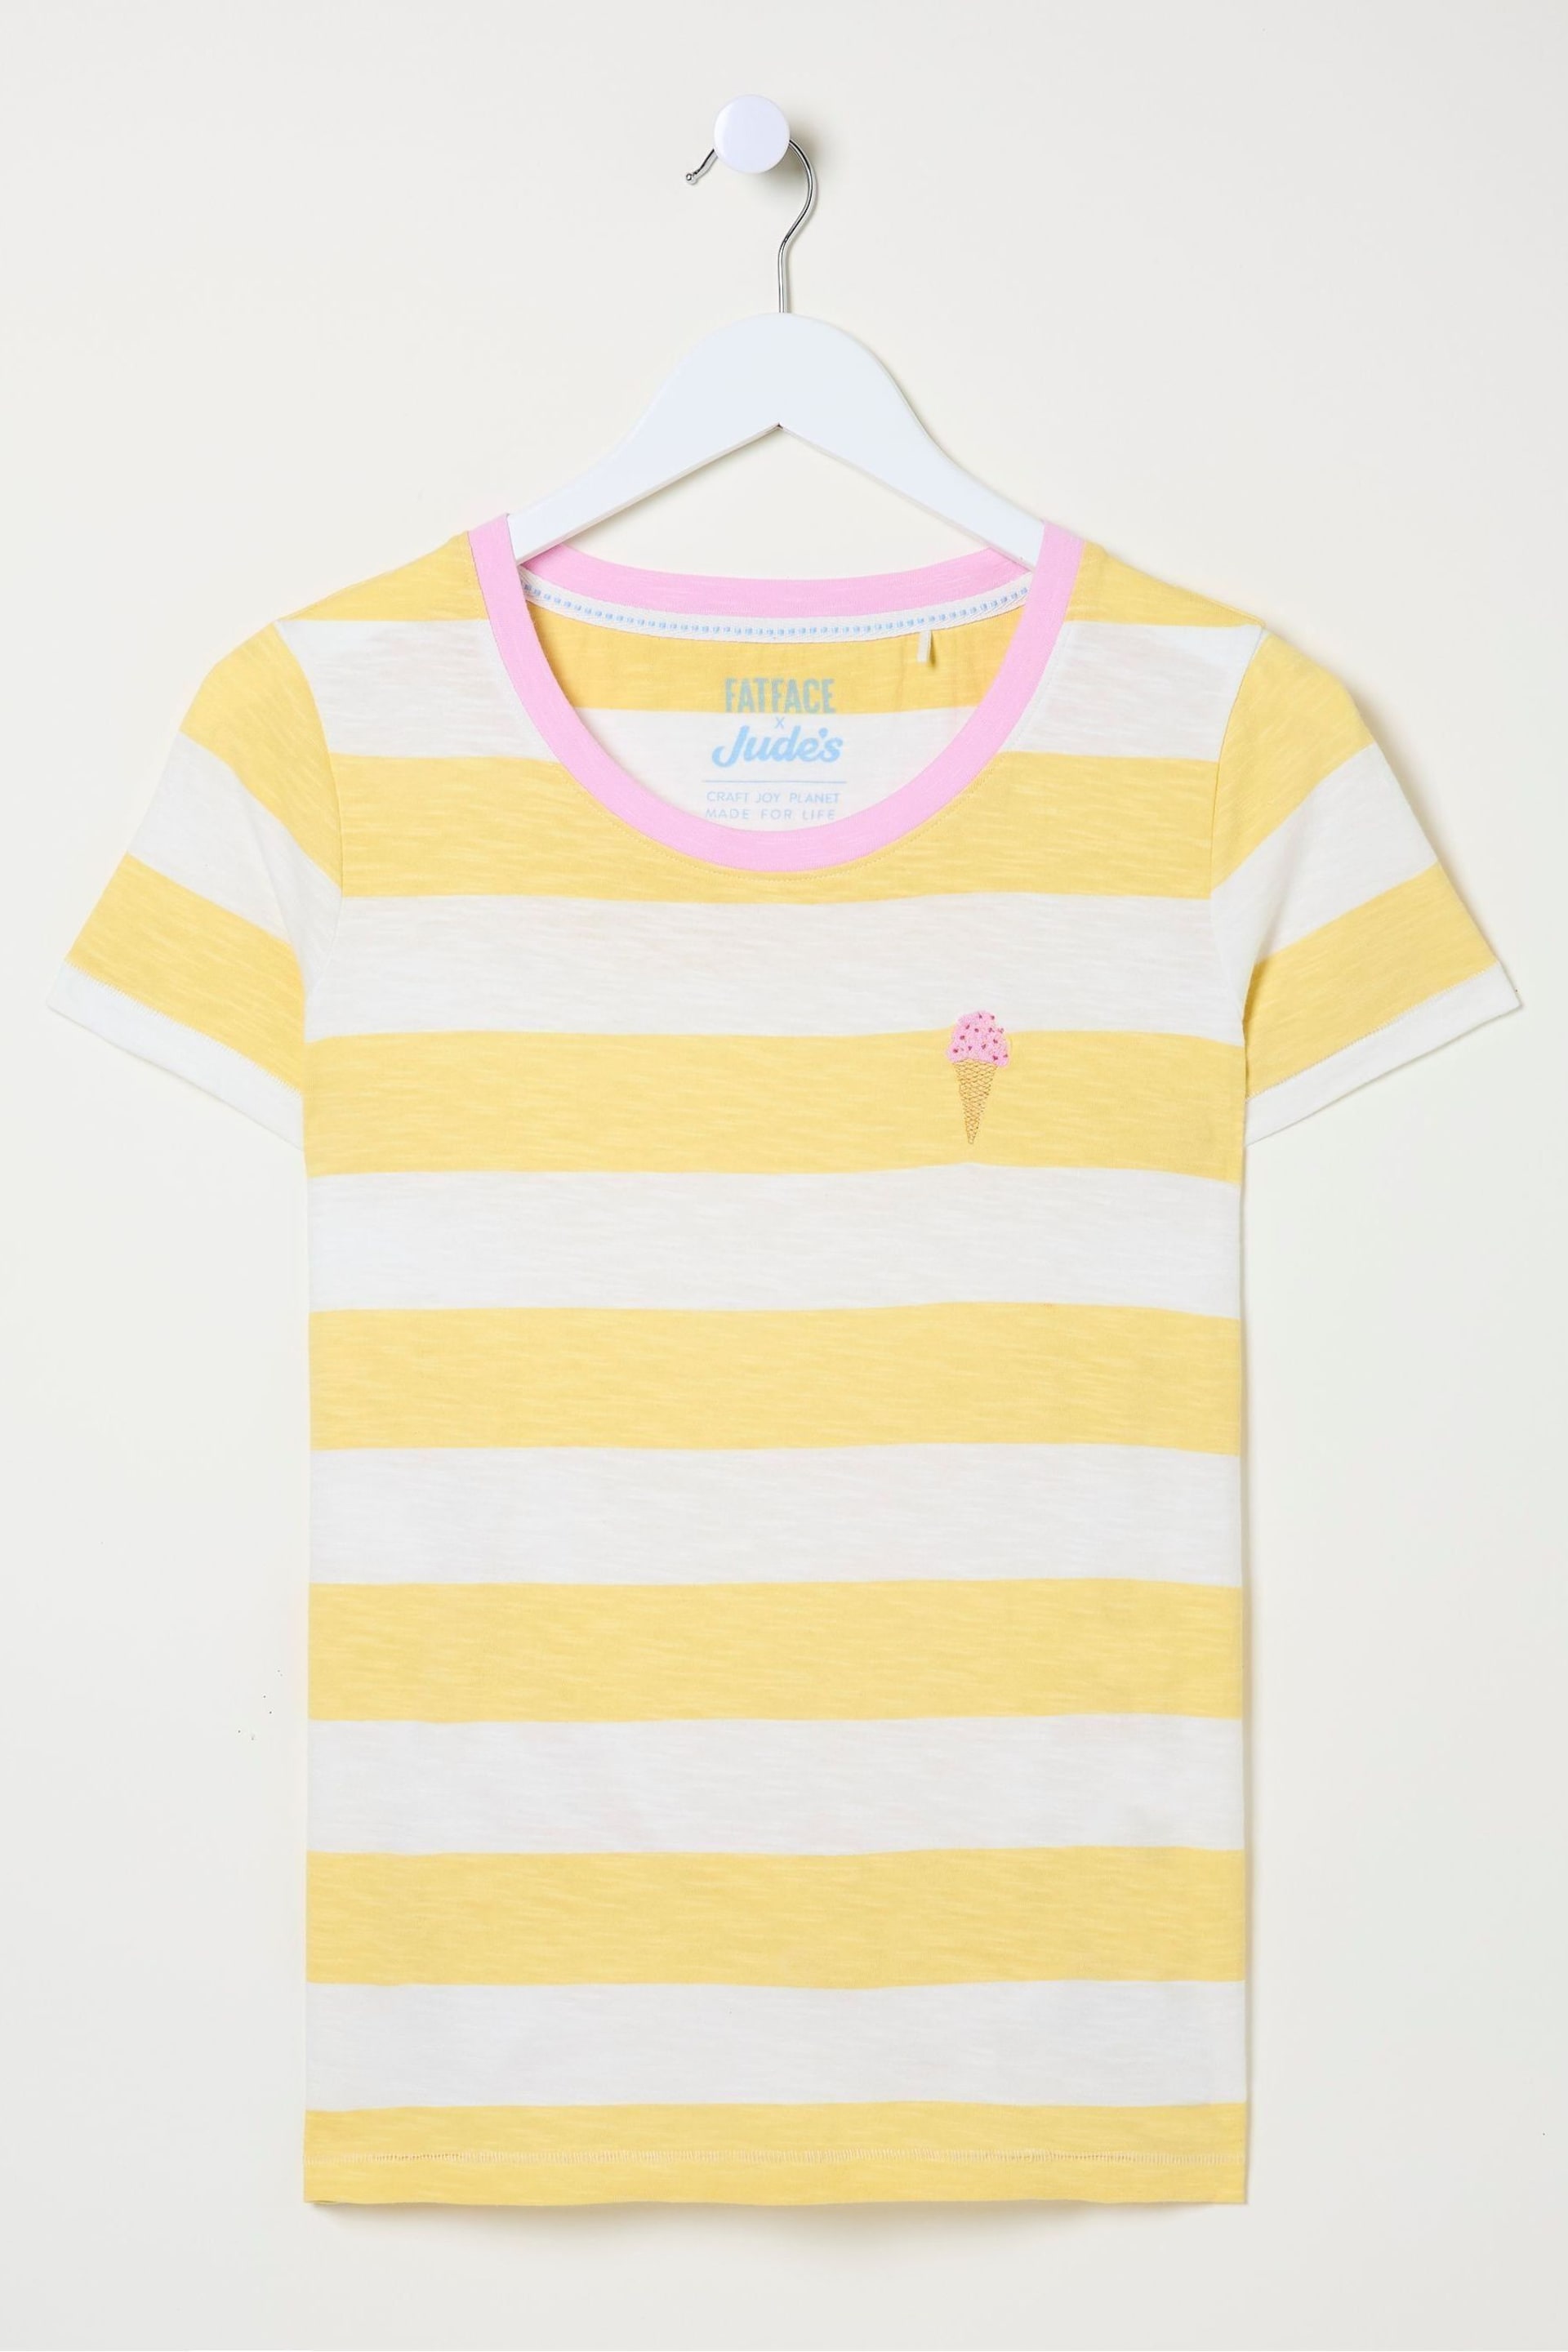 FatFace Yellow Natalie Stripe T-Shirt - Image 7 of 7